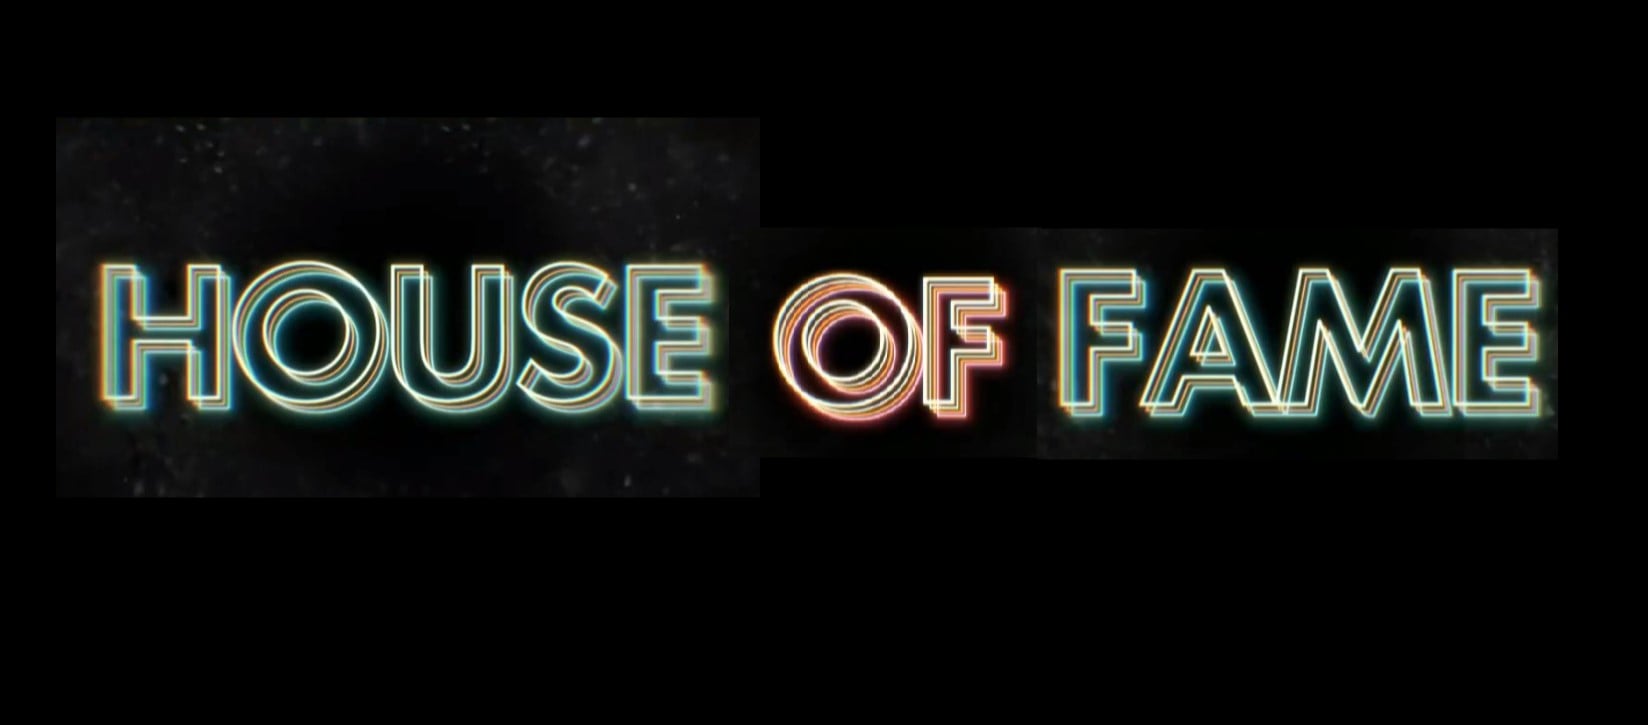 «House of fame»: Πότε κάνει πρεμιέρα; - Φωτογραφία 1